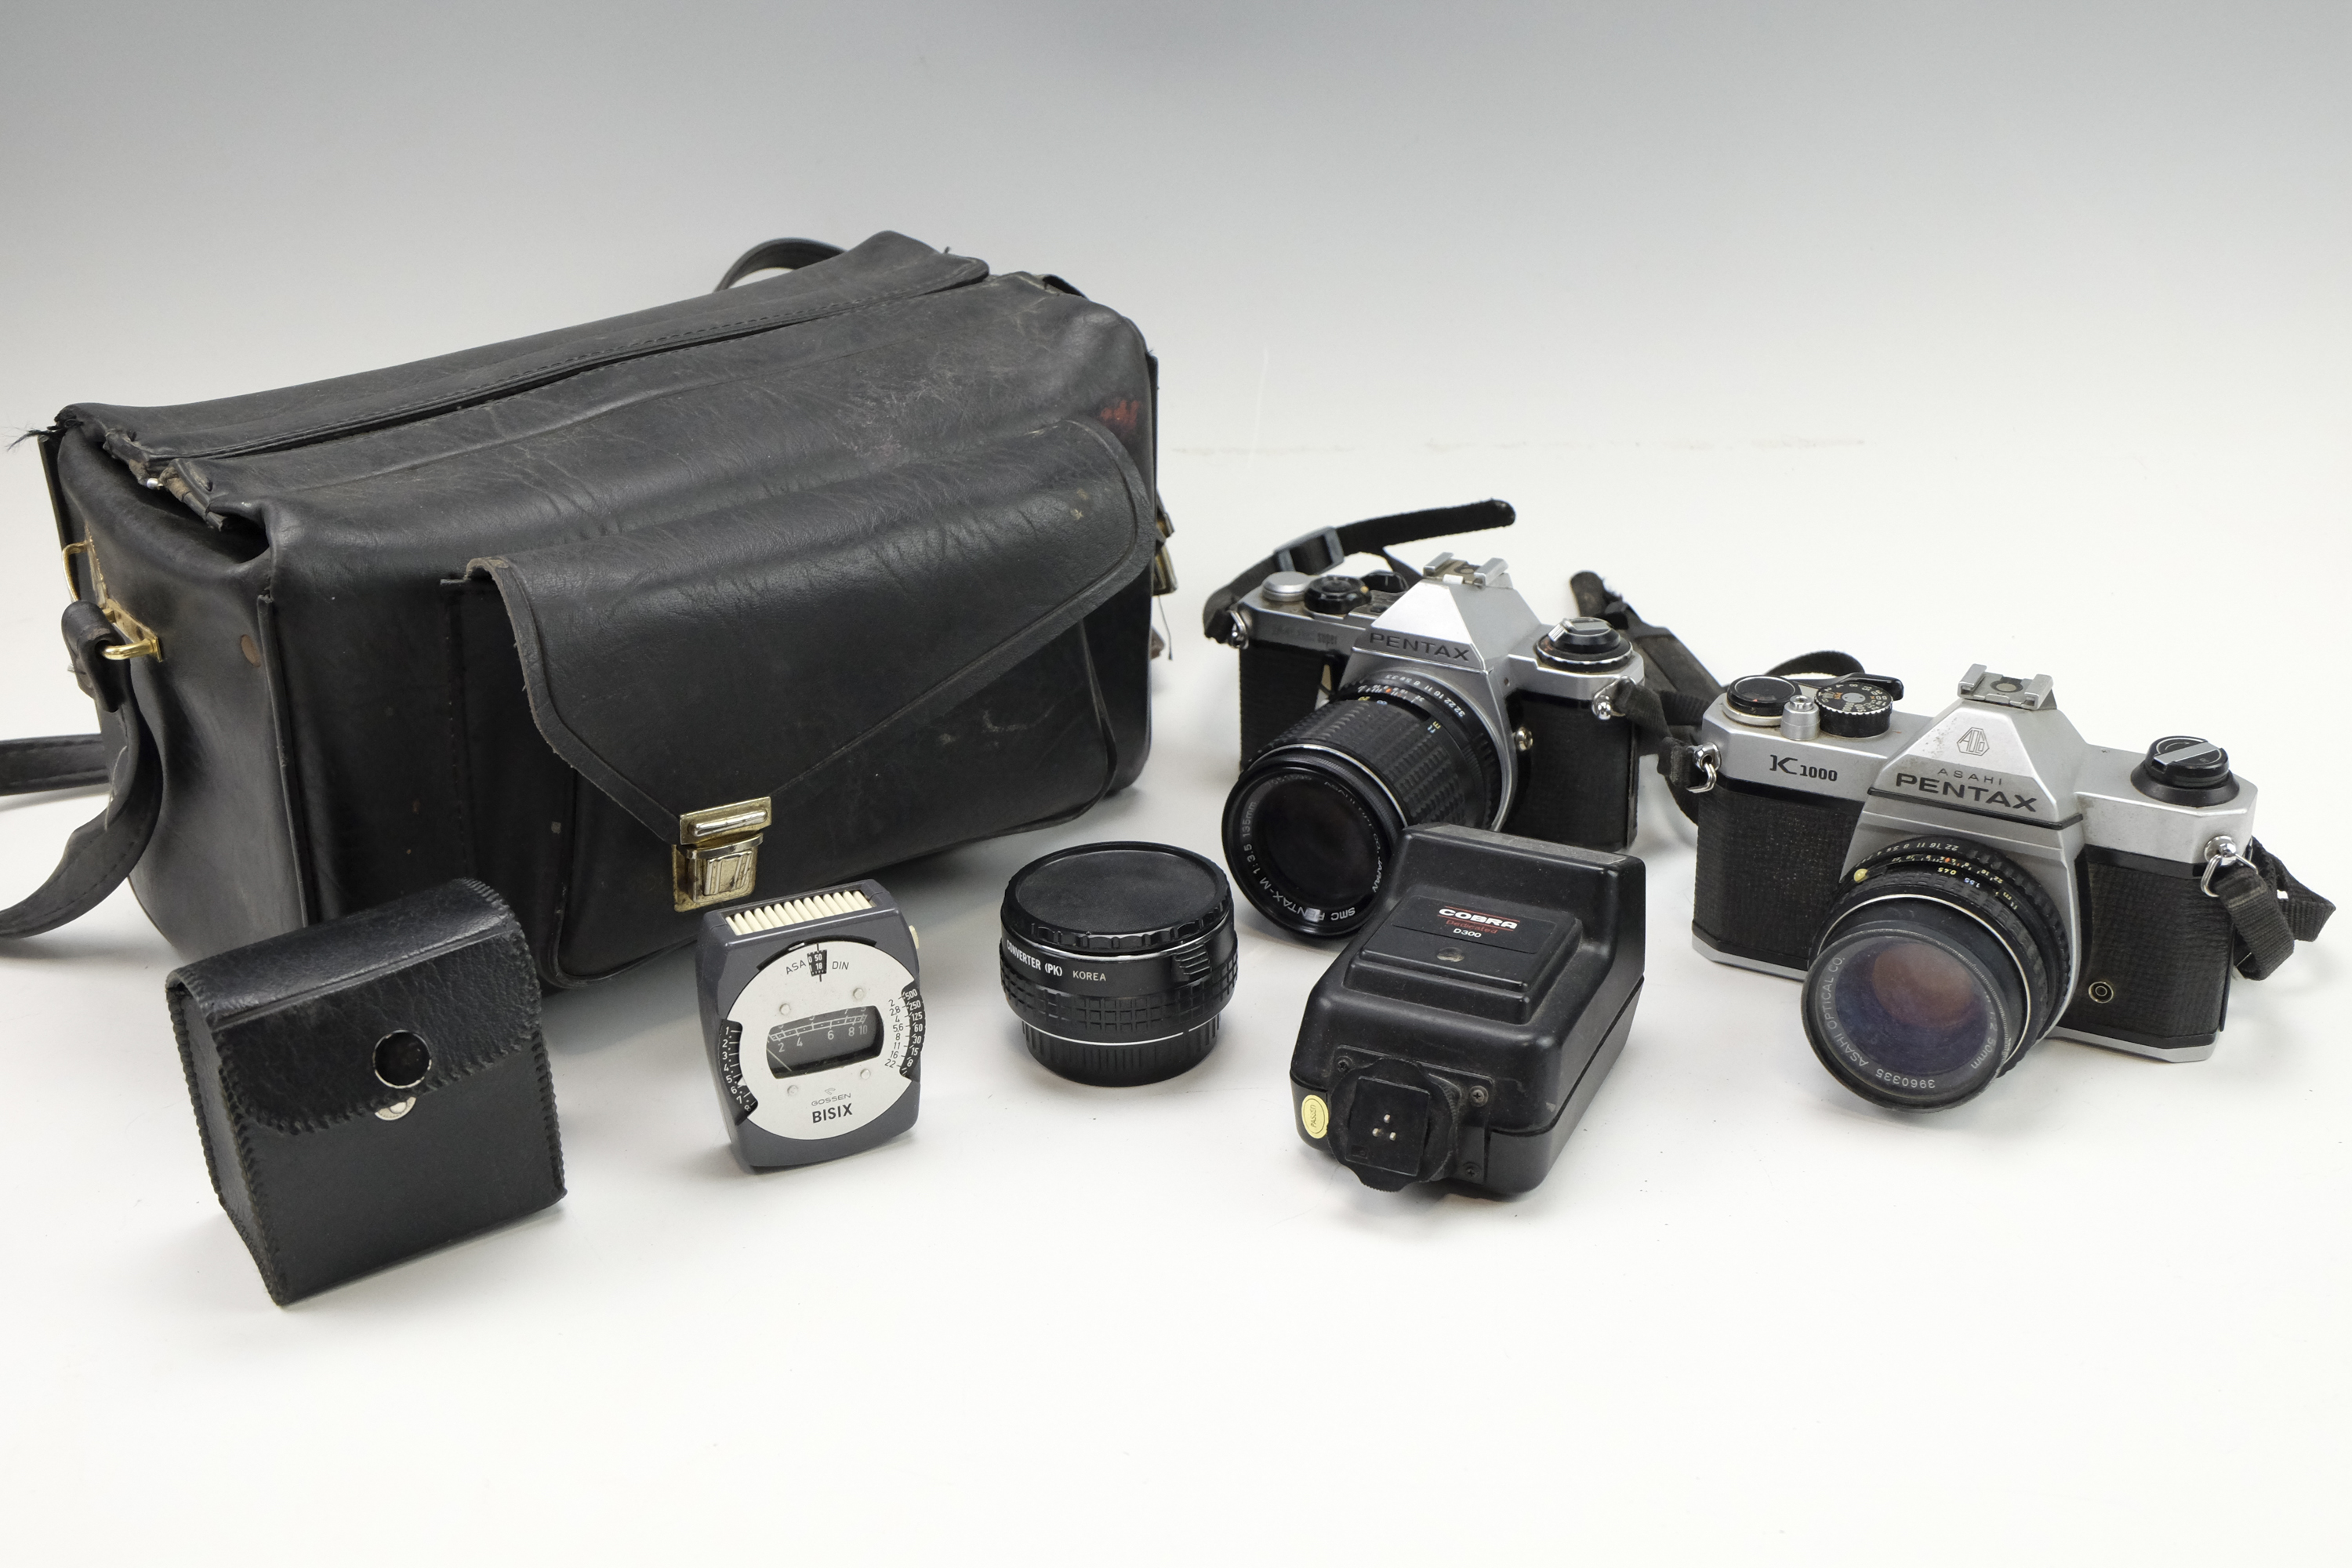 A Pentax K1000 film camera body together with a Pentax MEsuper, two Asahi Optical Co. lenses, a